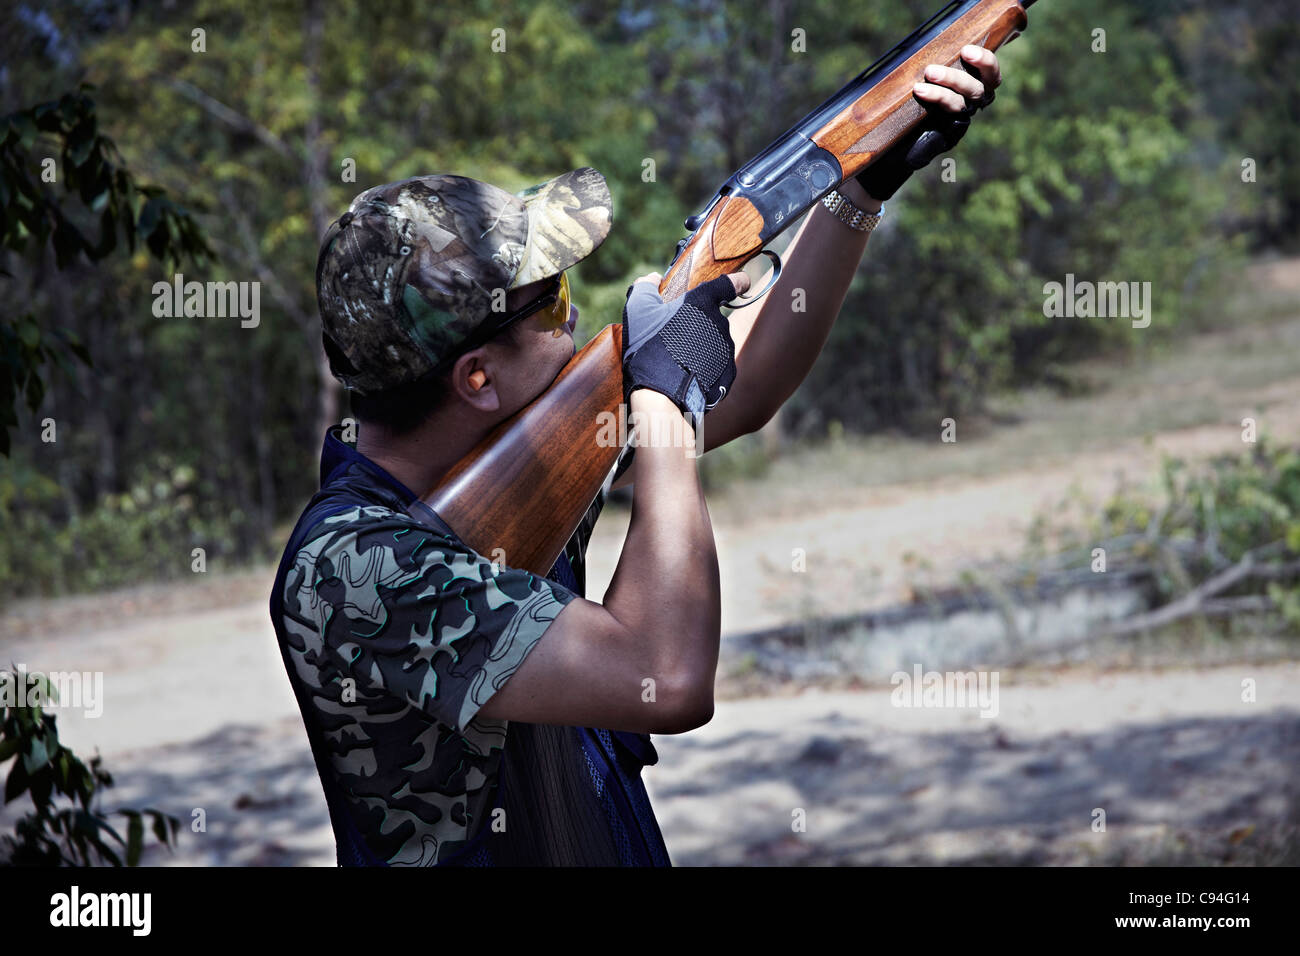 Clay pigeon shooting Man using a shotgun taking aim at a clay pigeon shoot Stock Photo